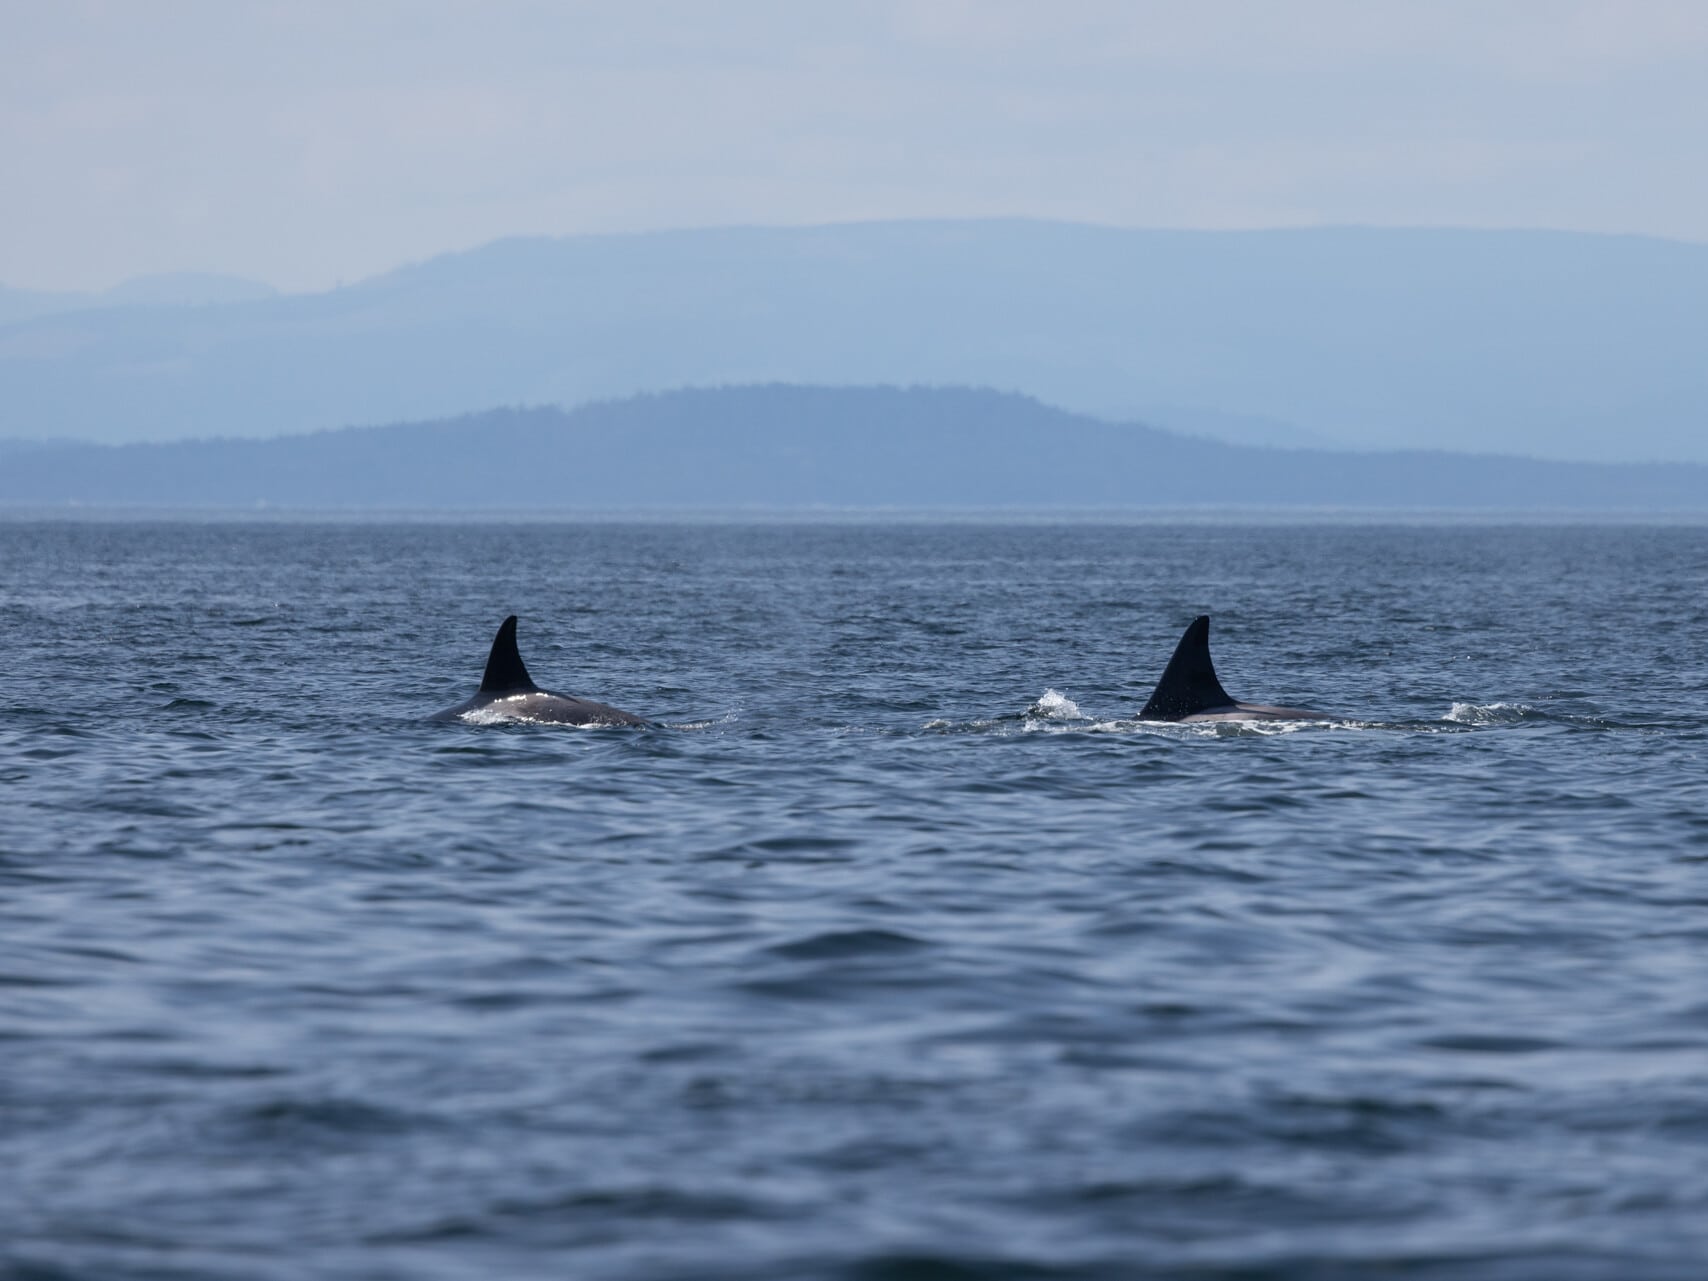 2 transient killer whales.